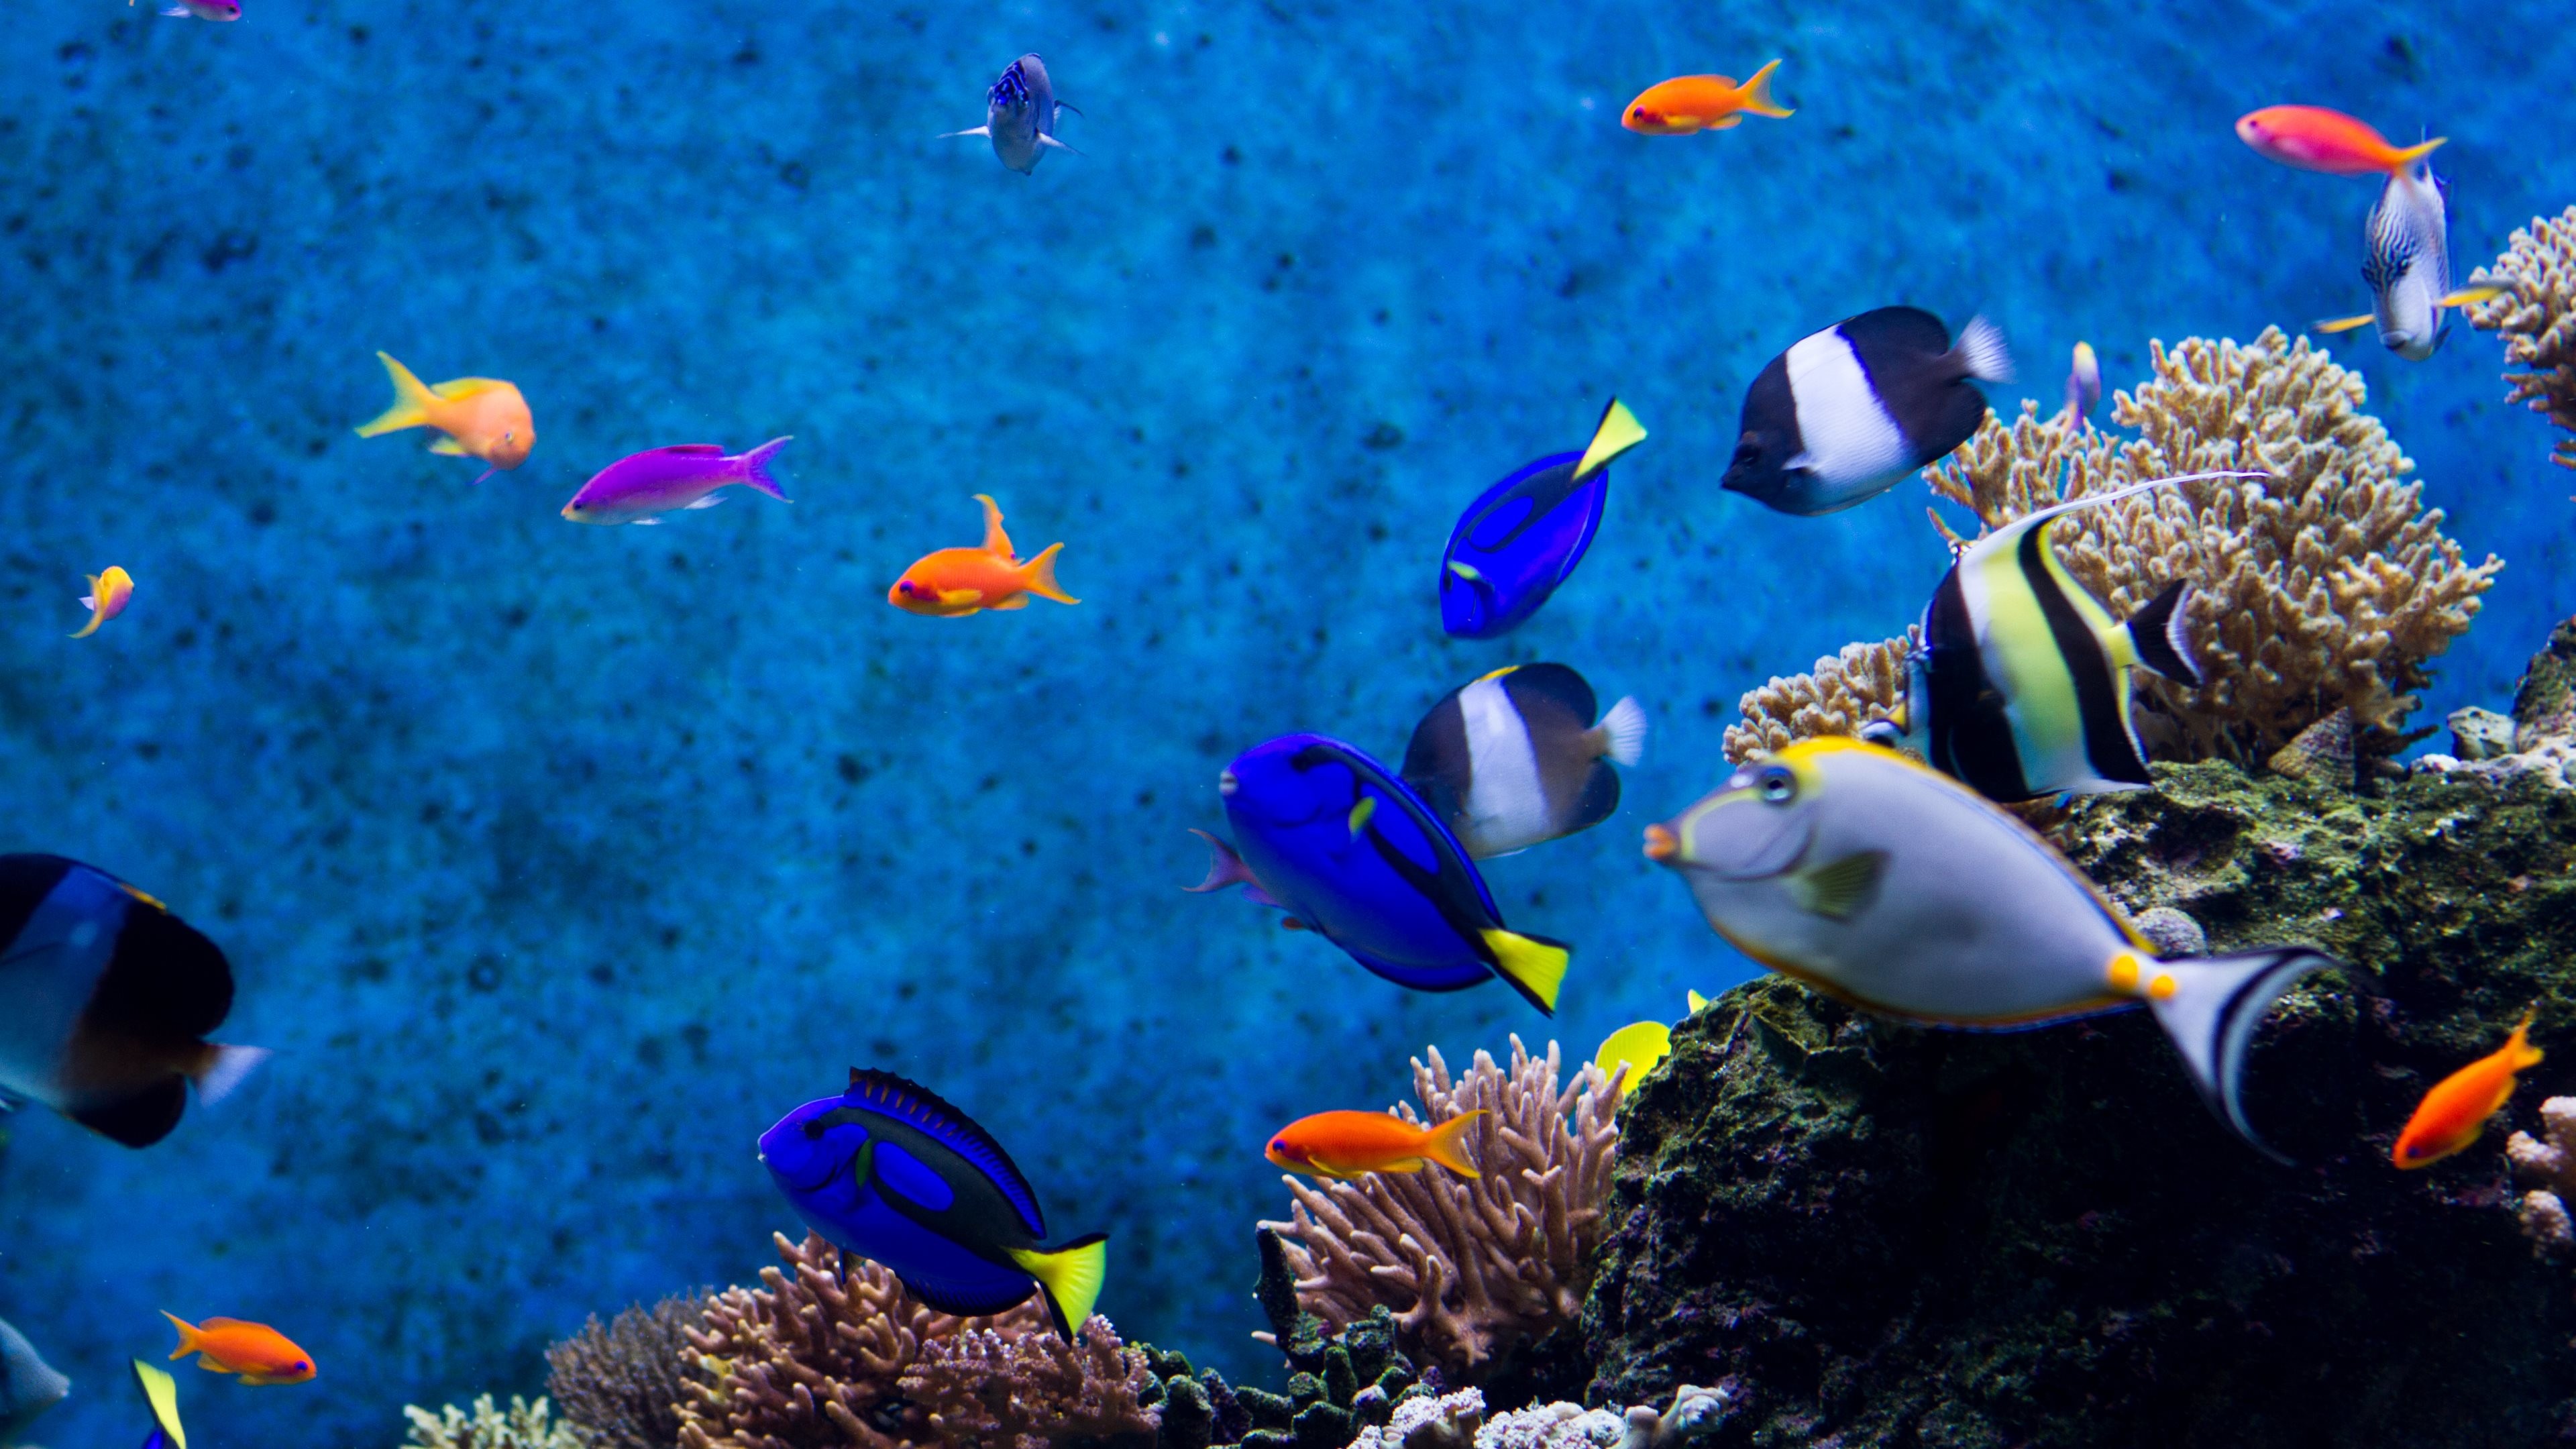 Aquarium Live Wallpaper Windows 10 (55+ images)